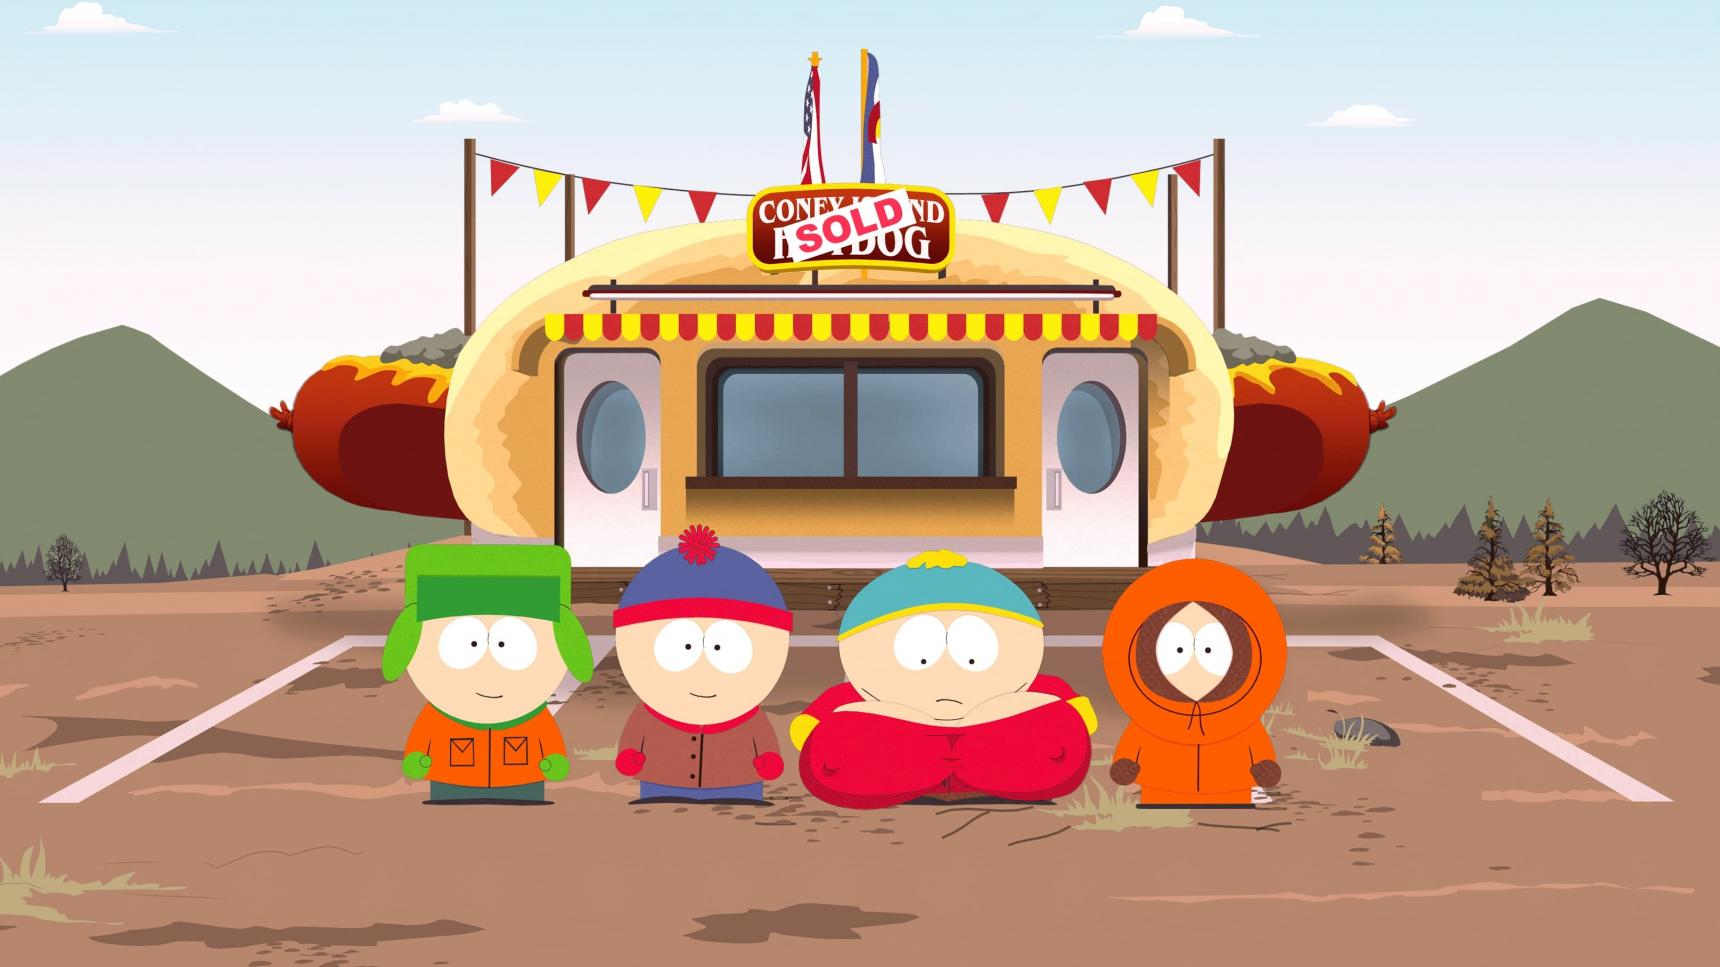 trailer South Park: Las guerras de streaming parte 2